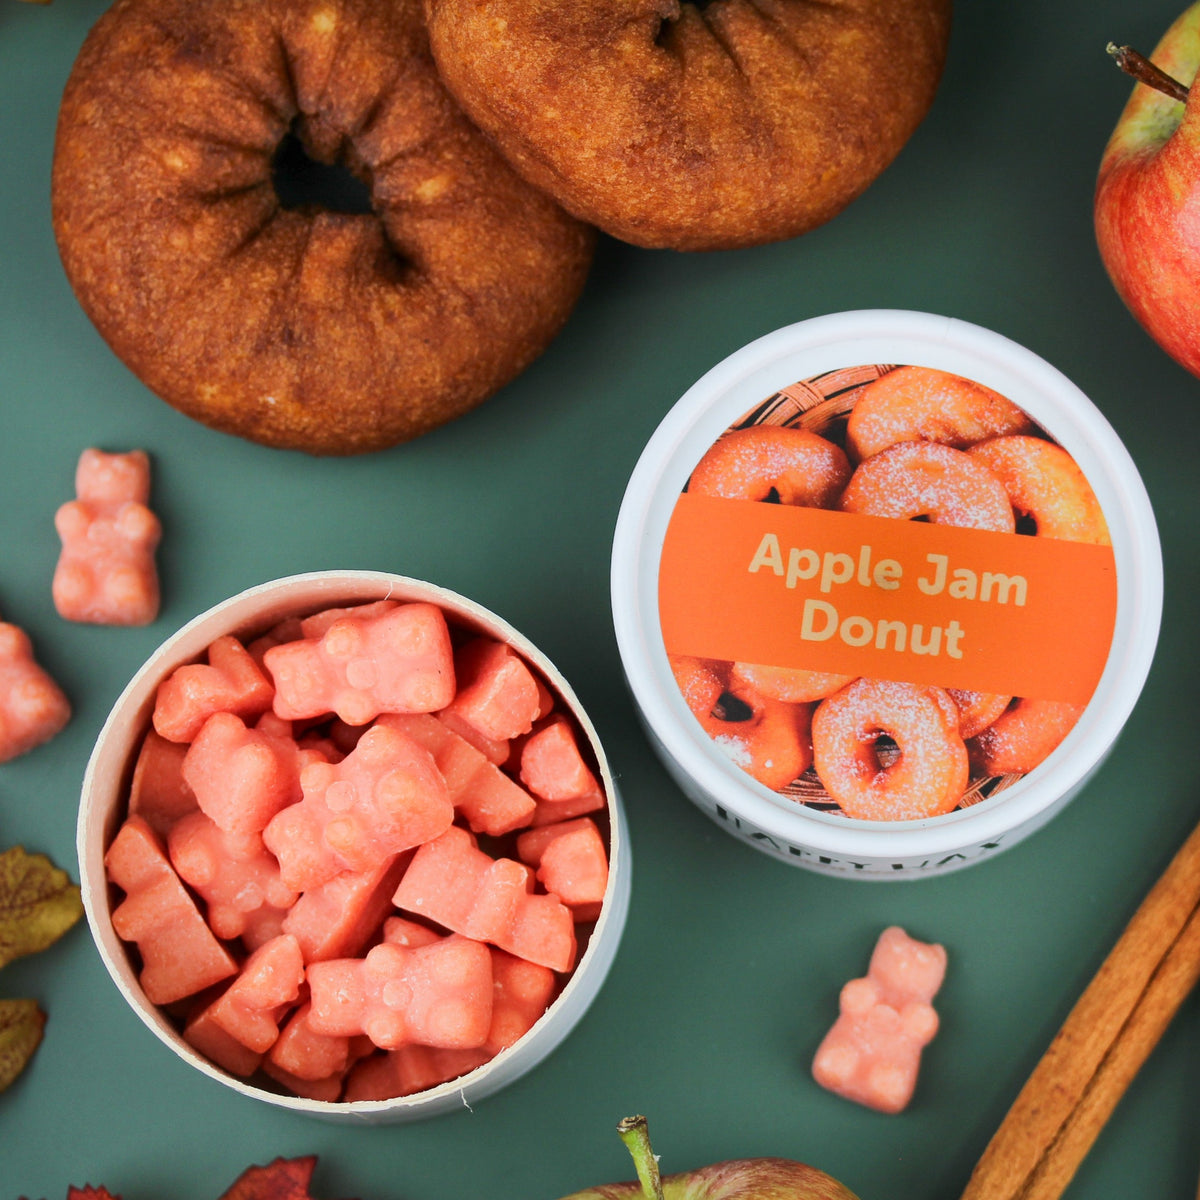 Apple Jam Donut Wax Melts